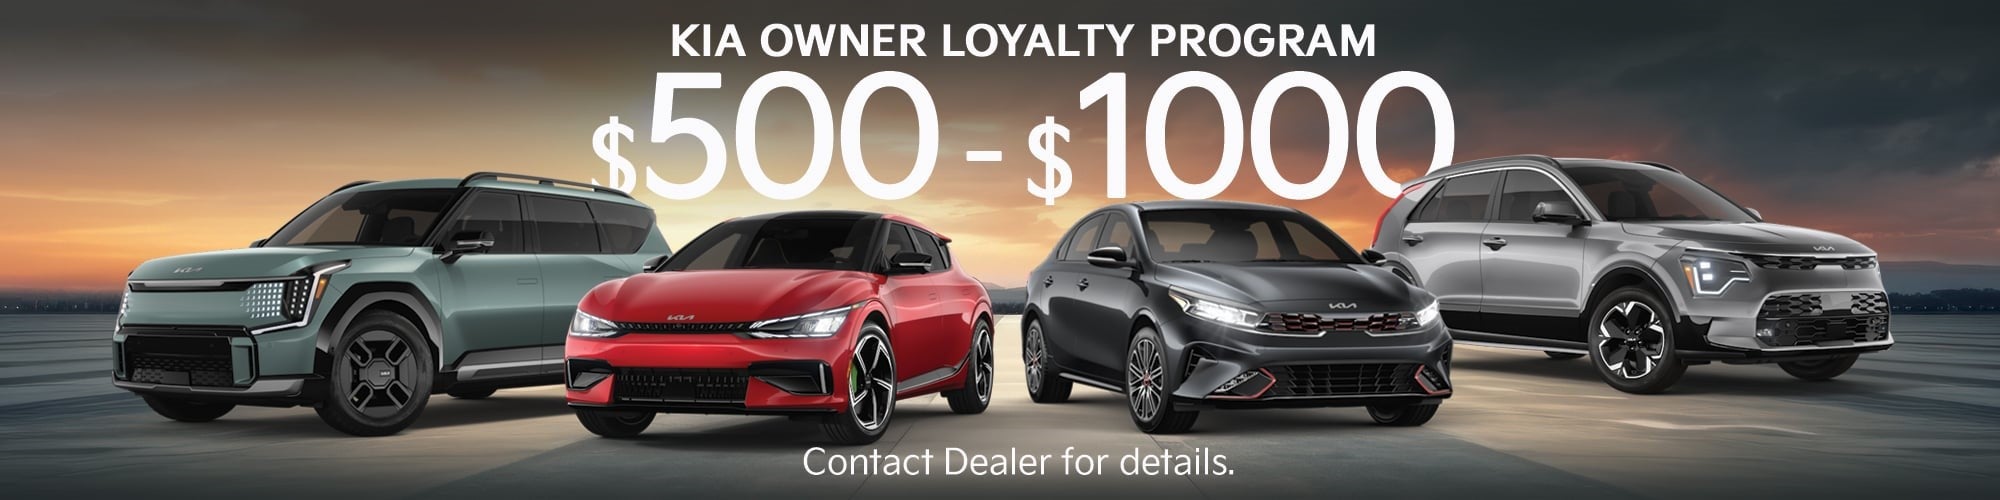 Kia Owner Loyalty Program